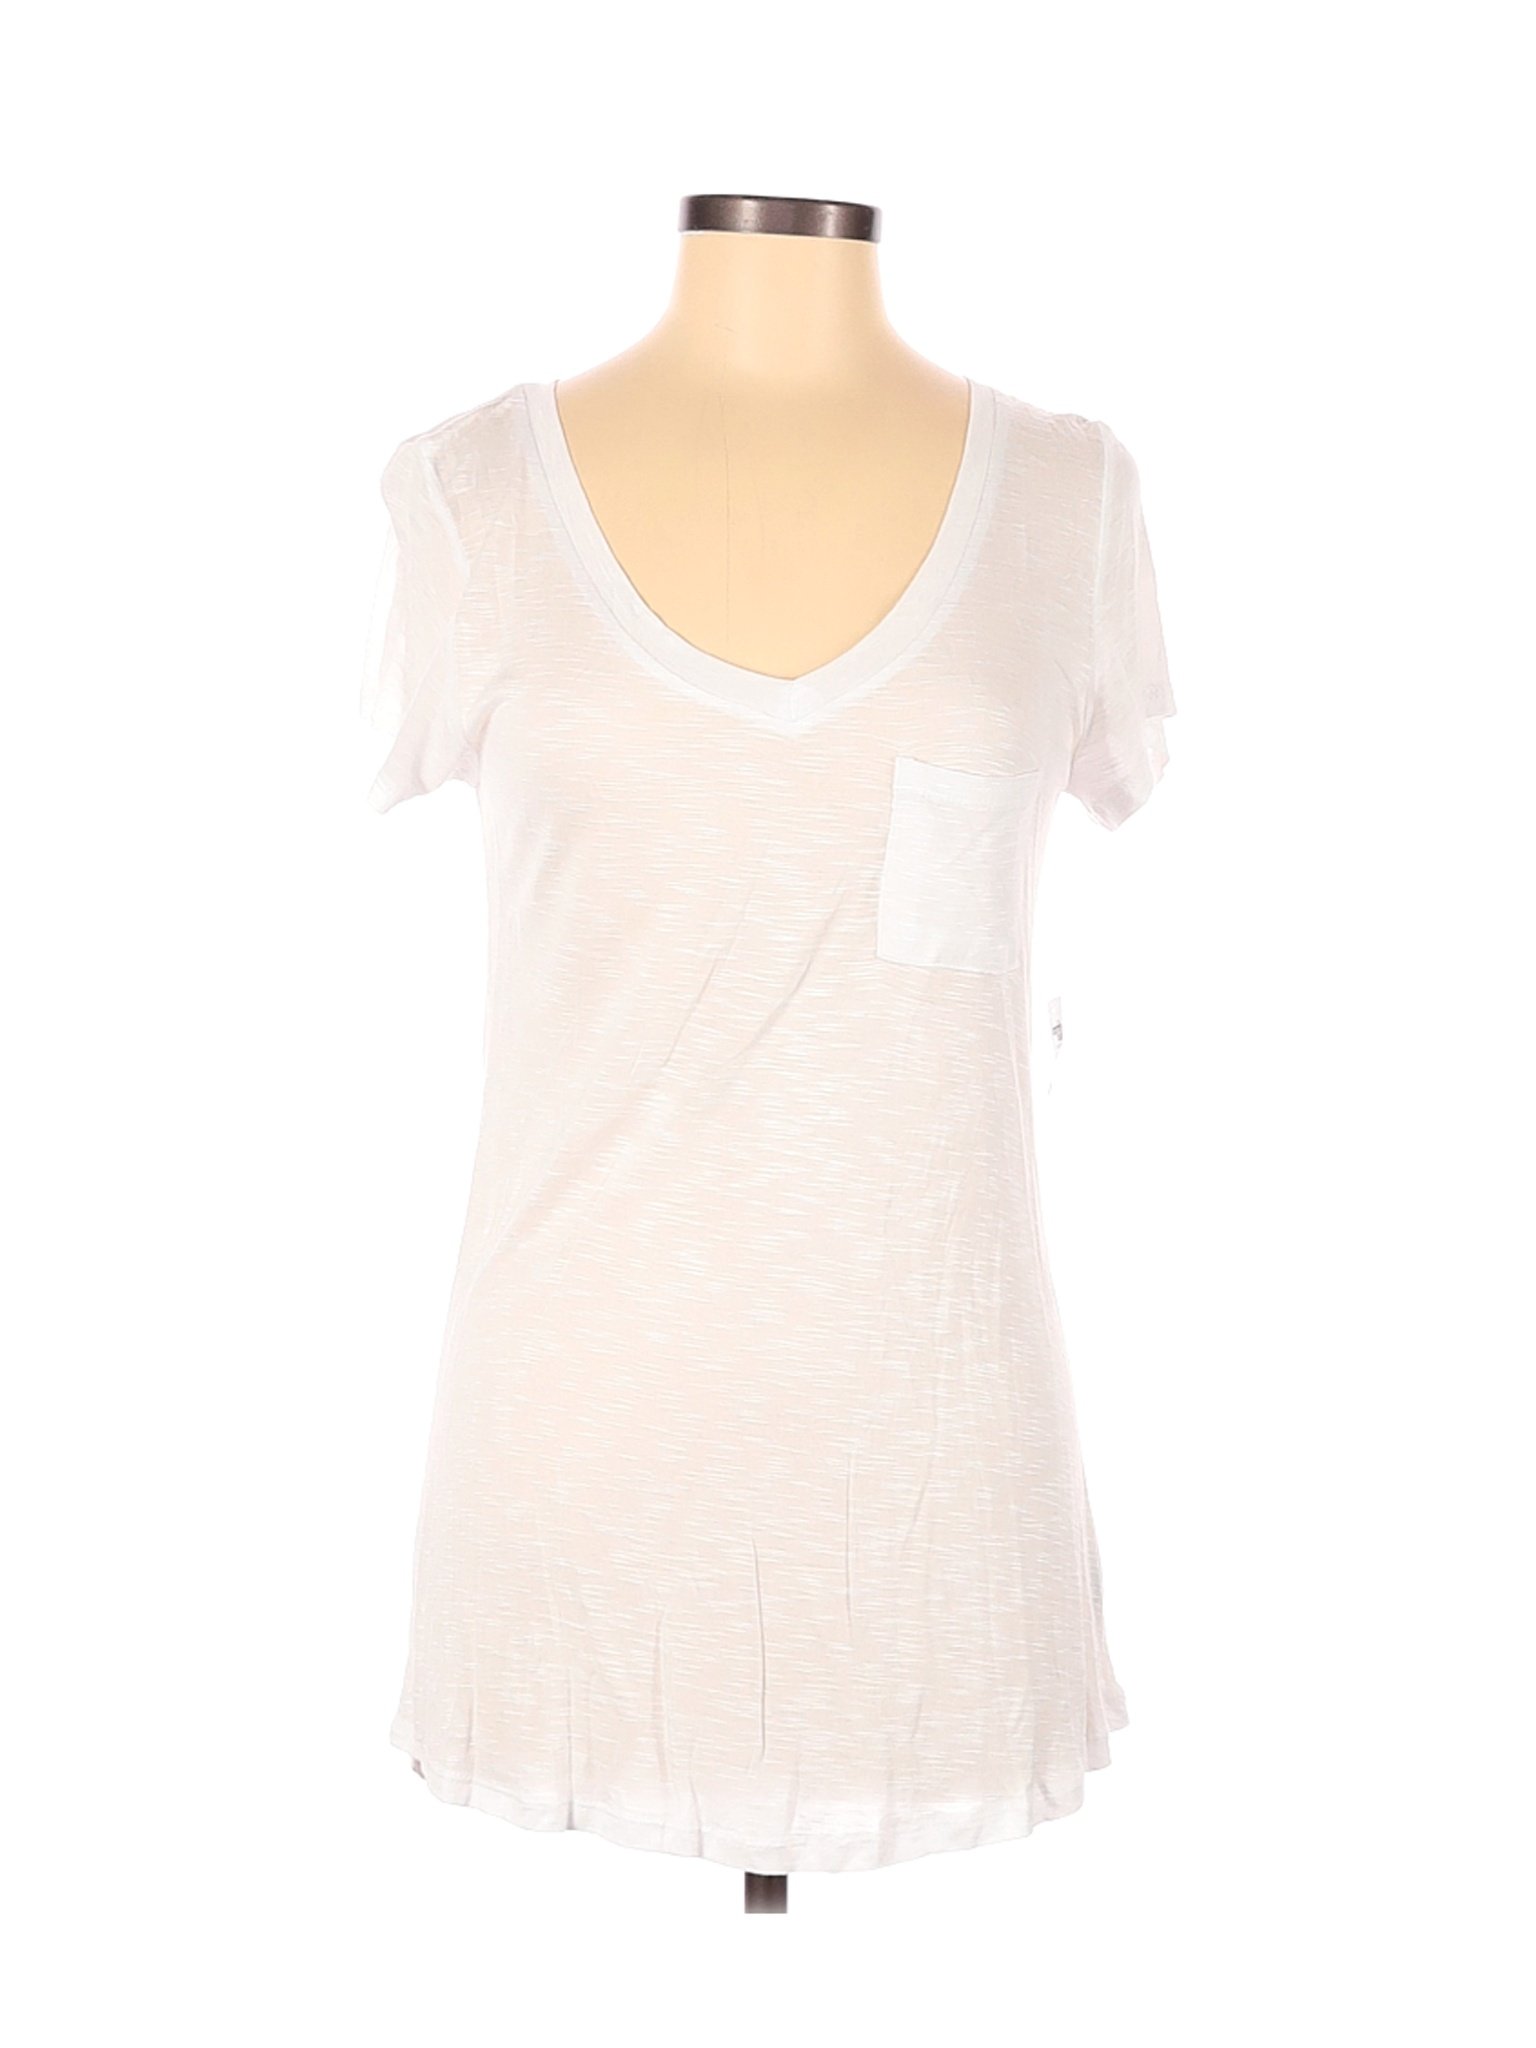 NWT Charlotte Russe Women Ivory Short Sleeve T-Shirt M | eBay